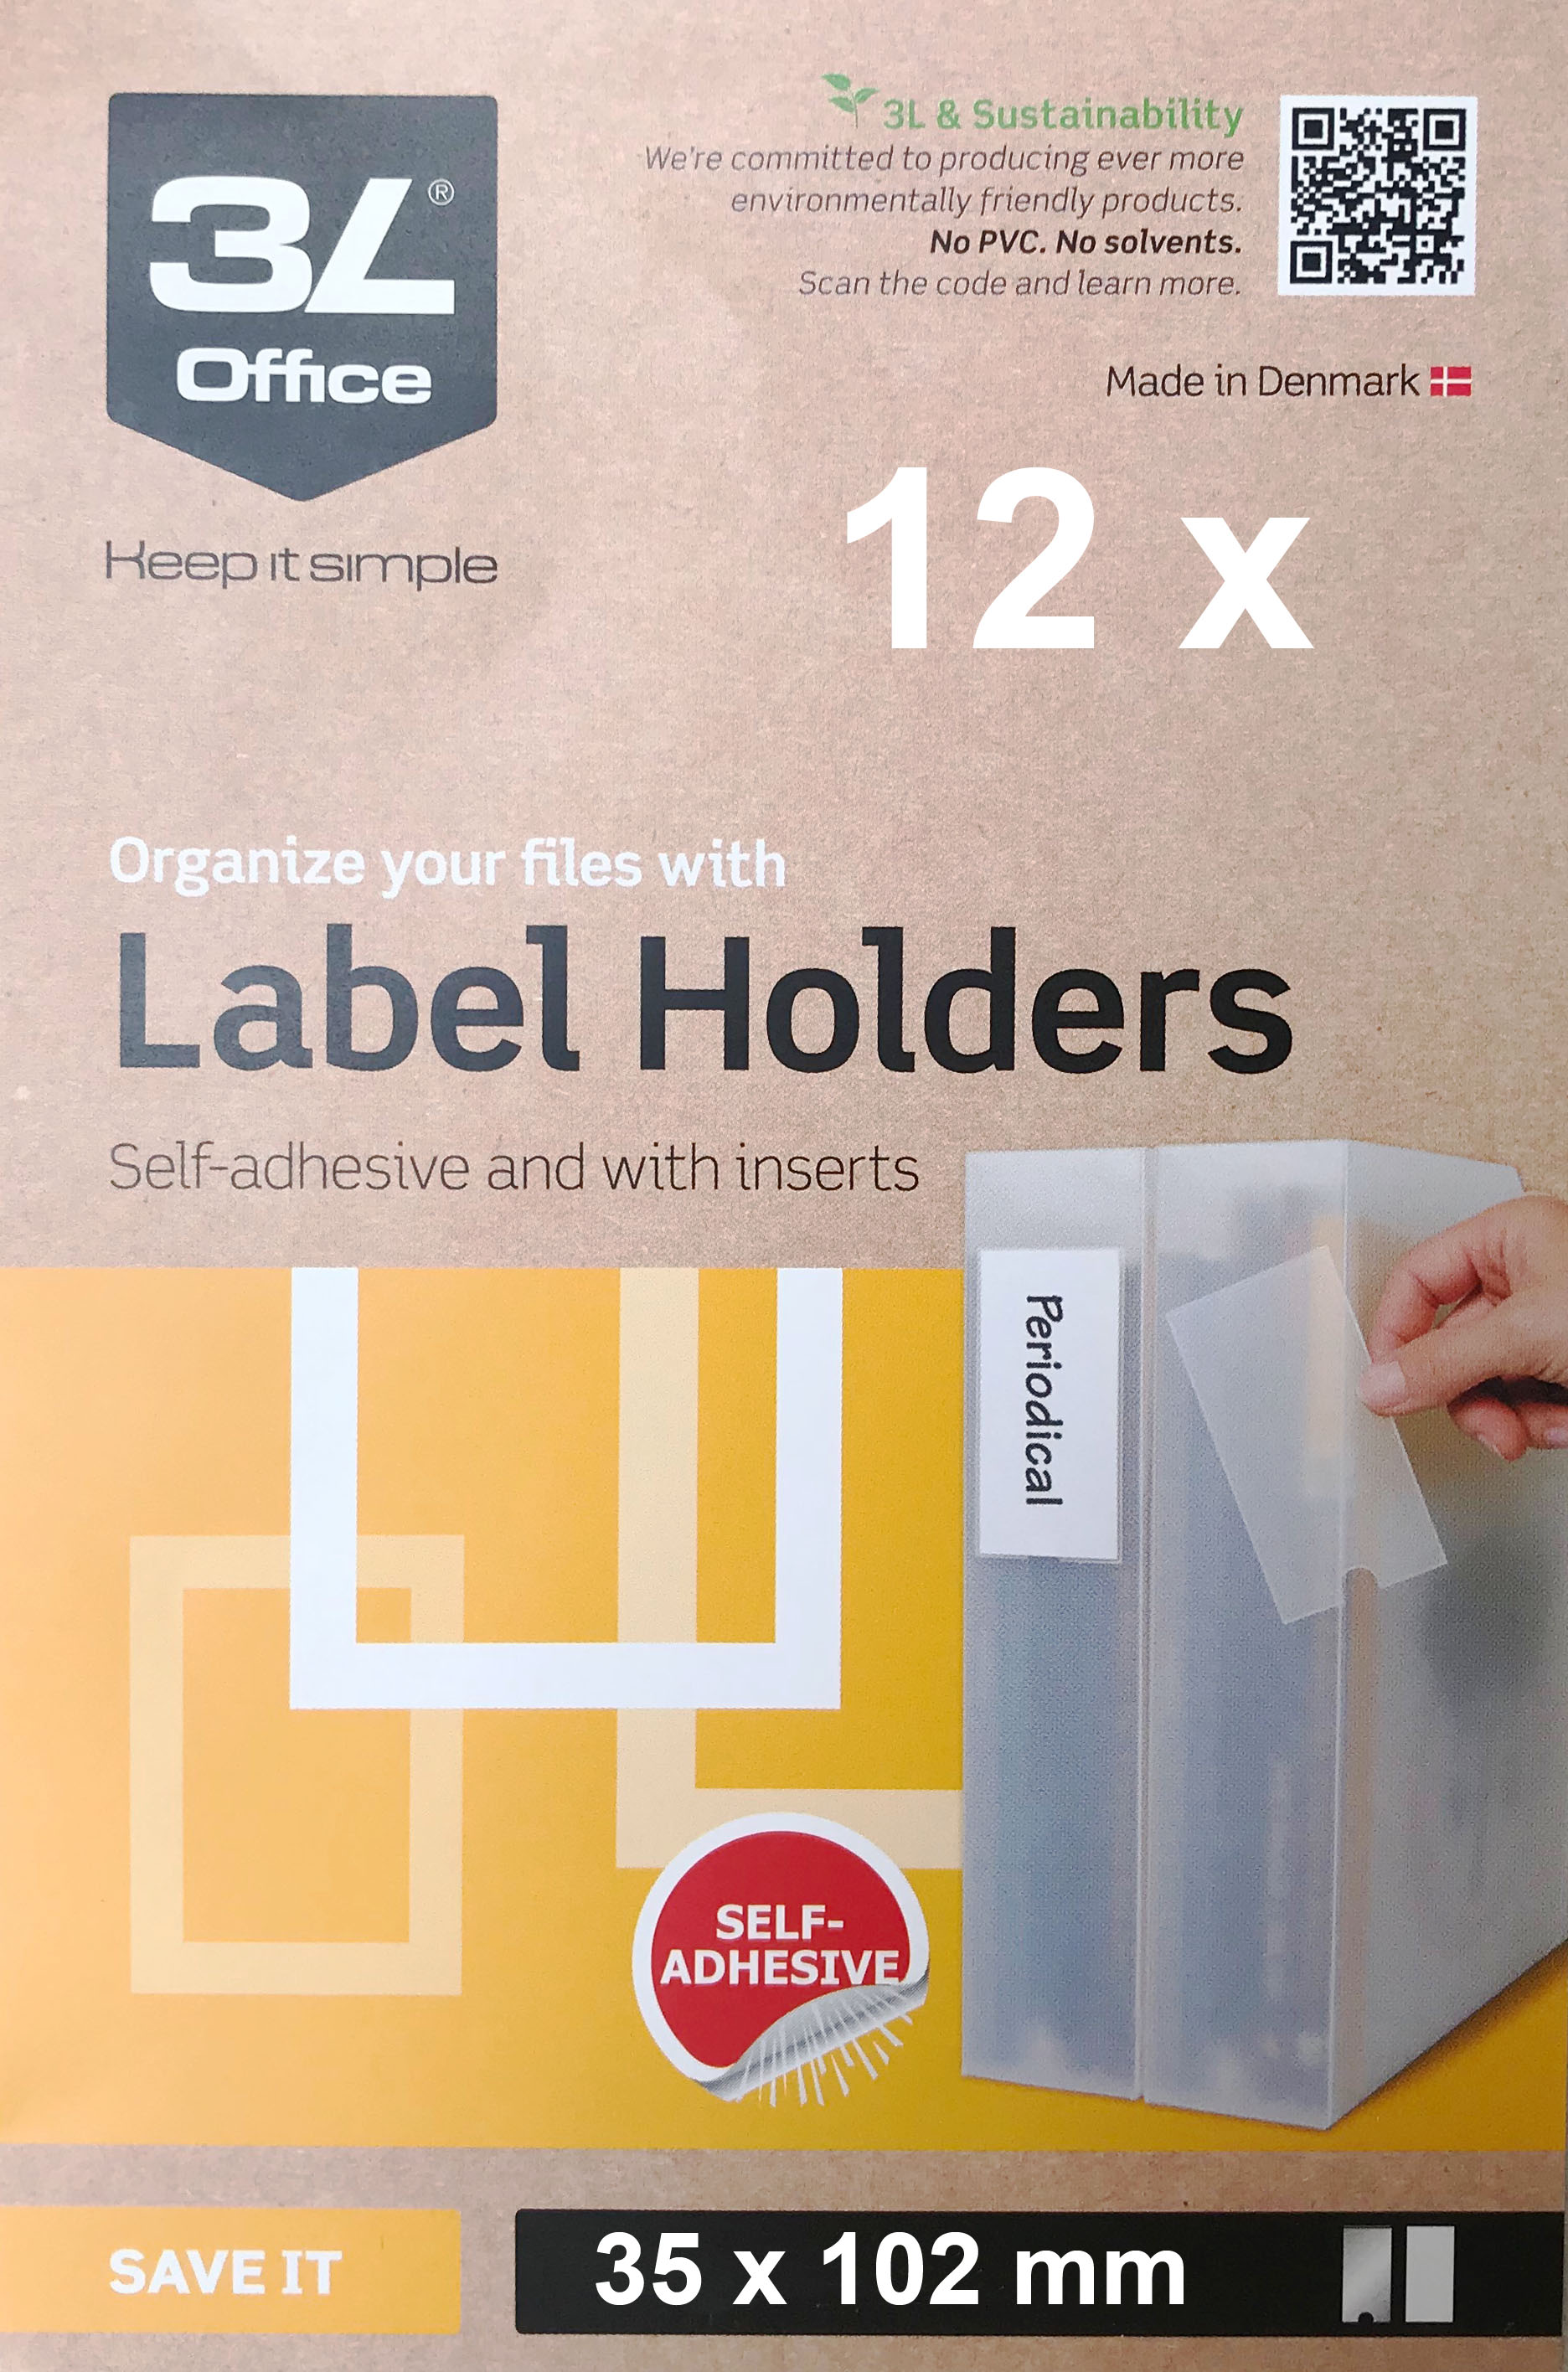 3L Label holders - 35 x 102 mm